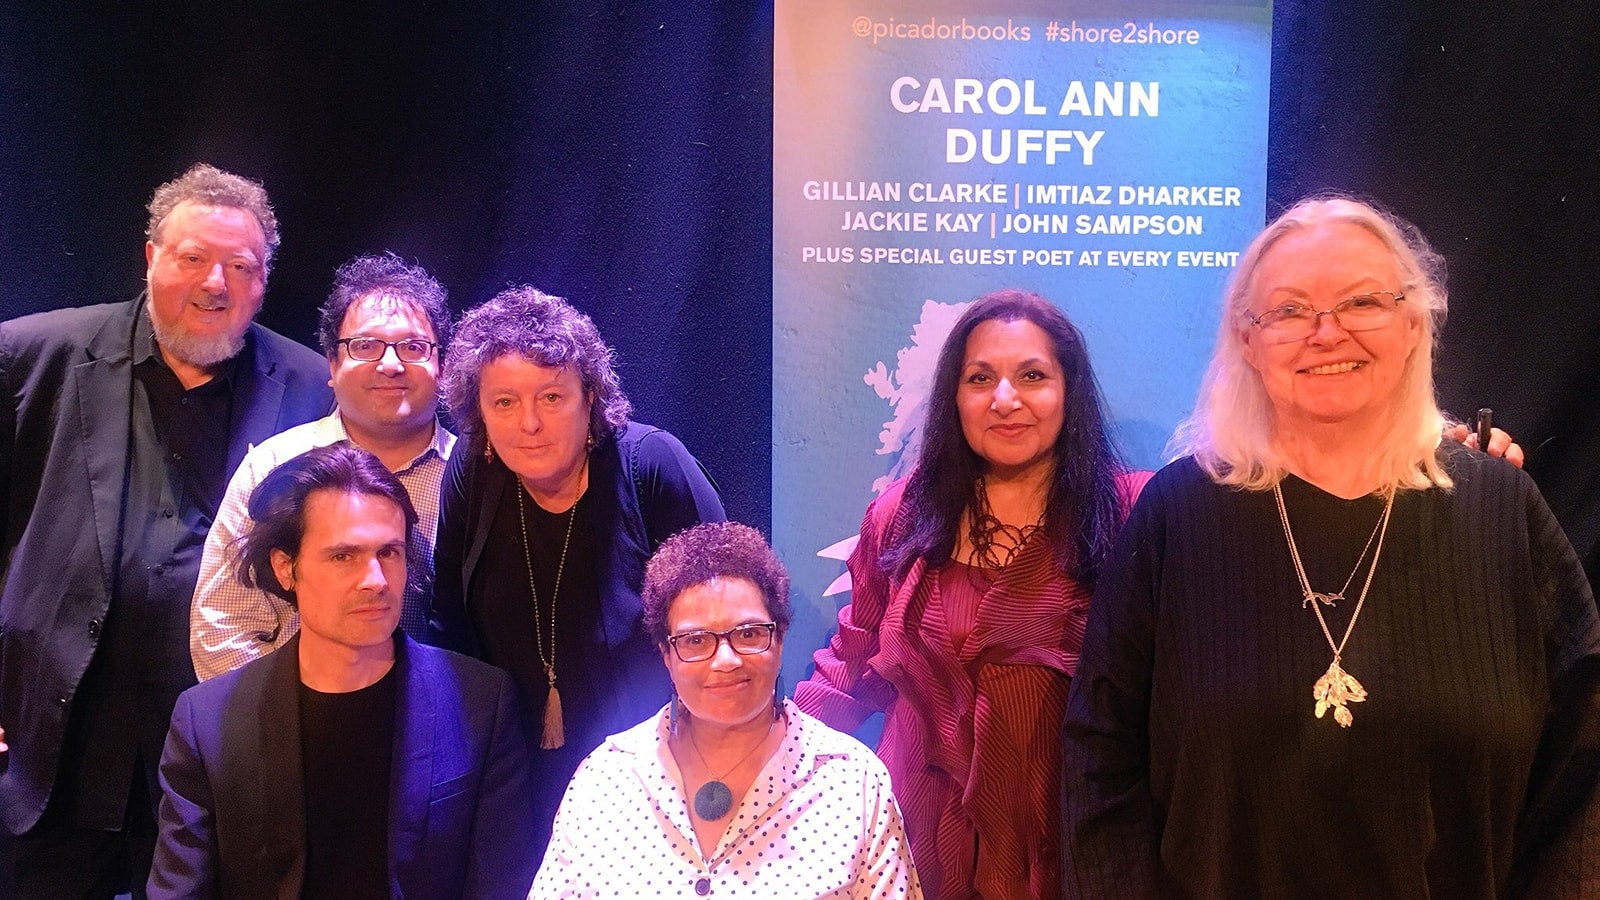 A group photo of Carol Ann Duffy, Gillian Clarke, Imtiaz Dharker, Jackie Kay and John Sampson